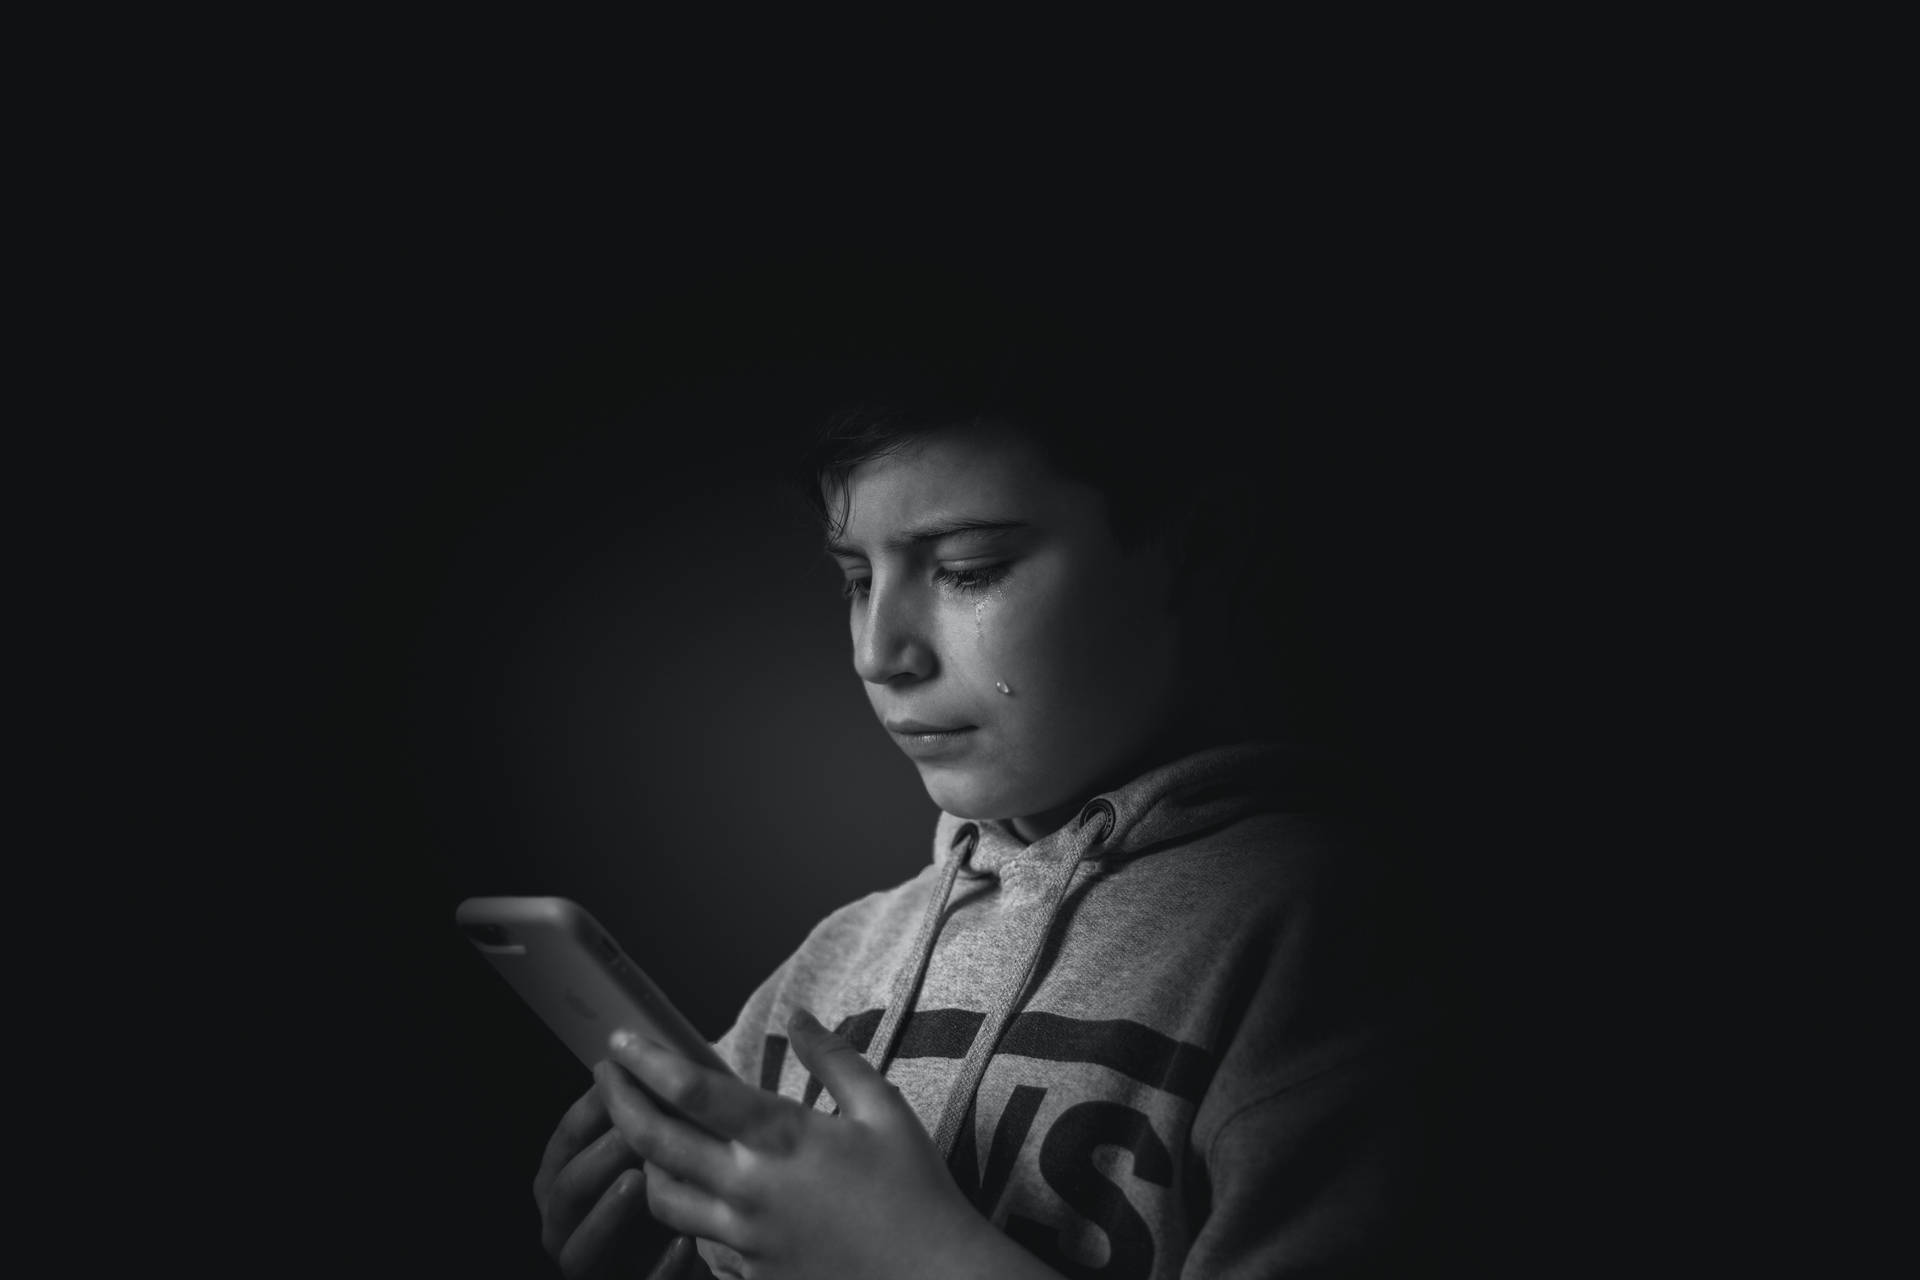 Crying Sad Boy With Smartphone